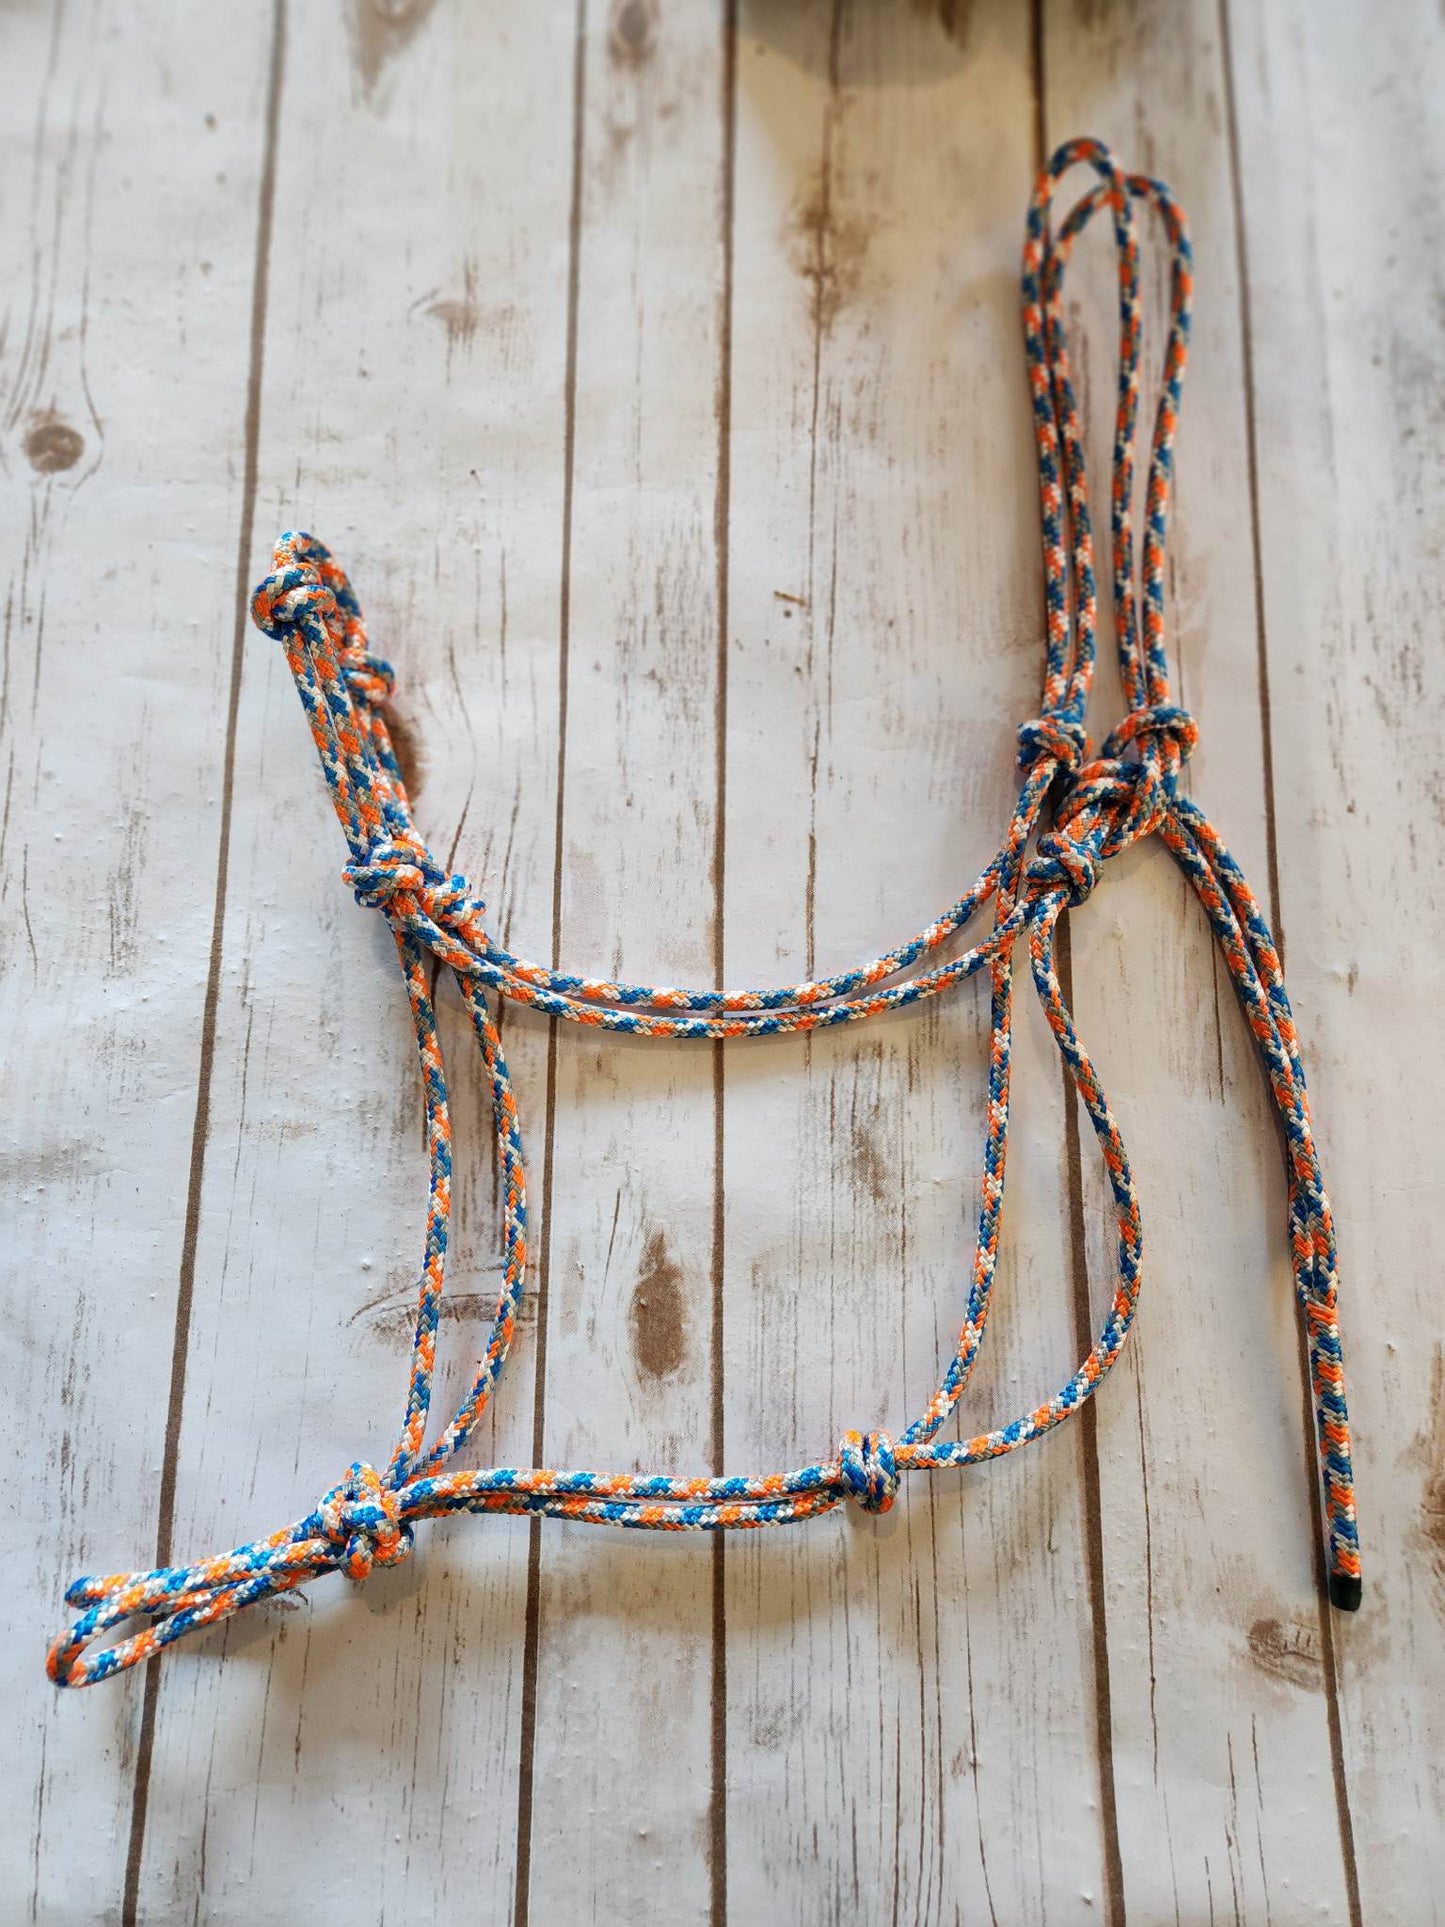 Soft 4-Knot Average Horse Rope Halter